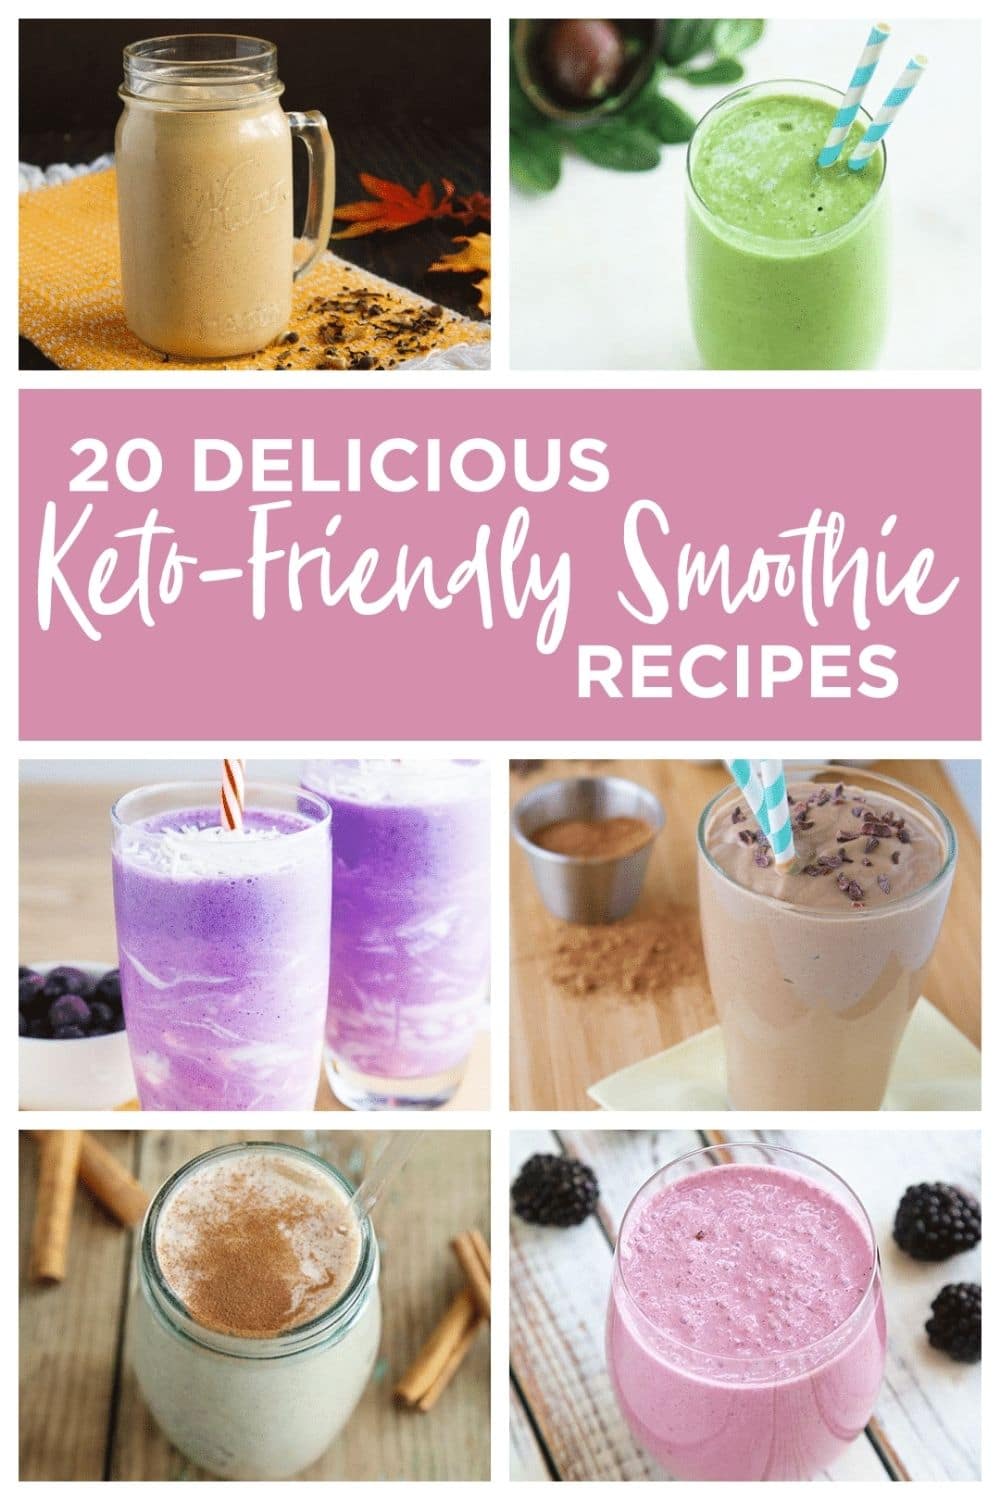 keto smoothie recipes collage hero image